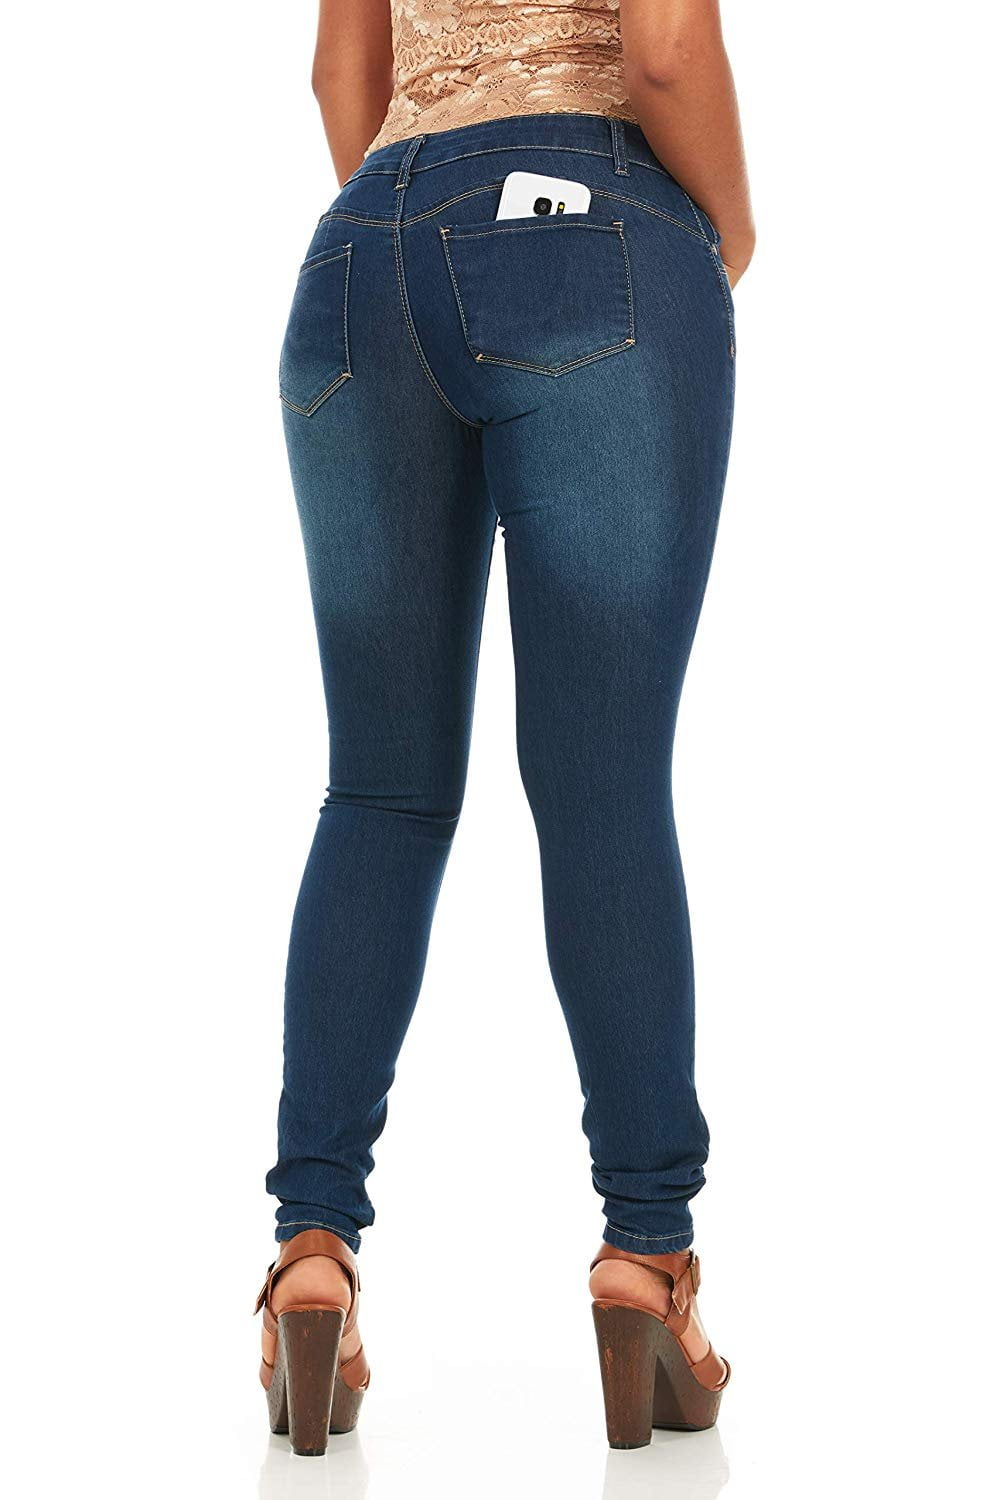 Walmart Tight Jeans Ass Booty